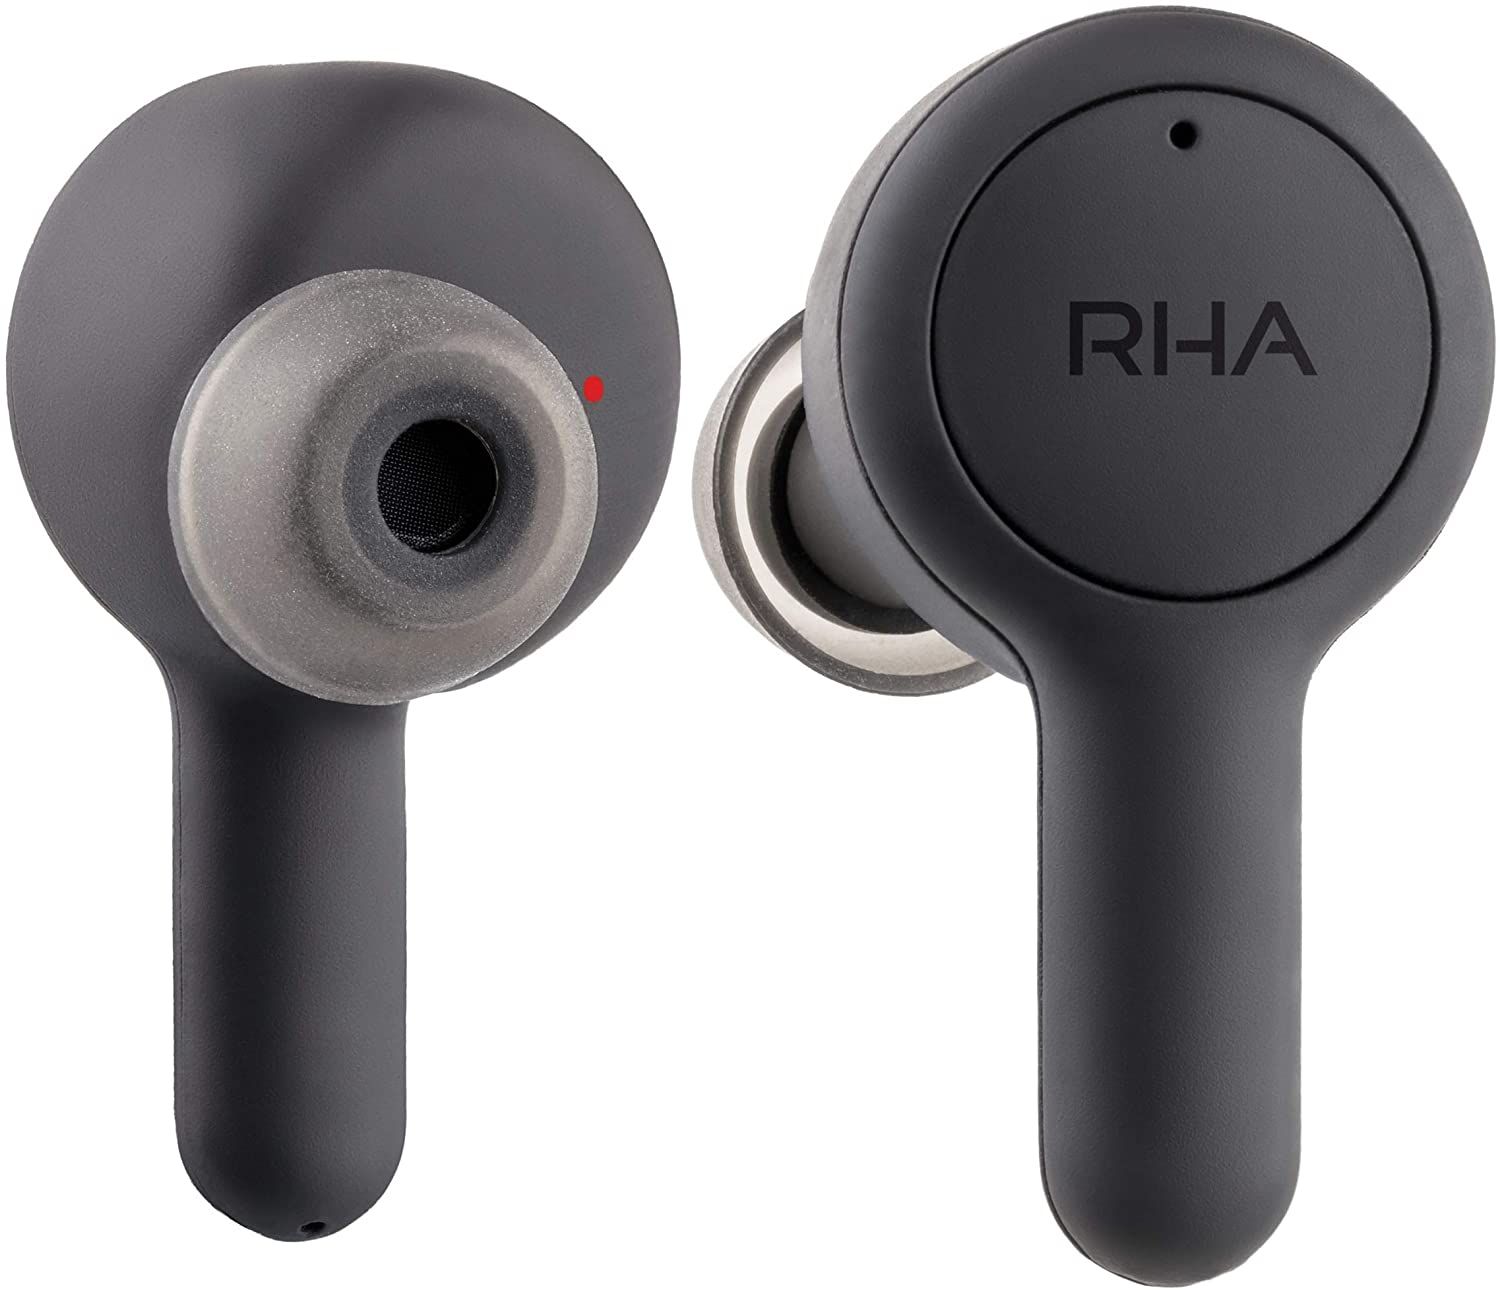 A pair of RHA TrueConnect earbuds